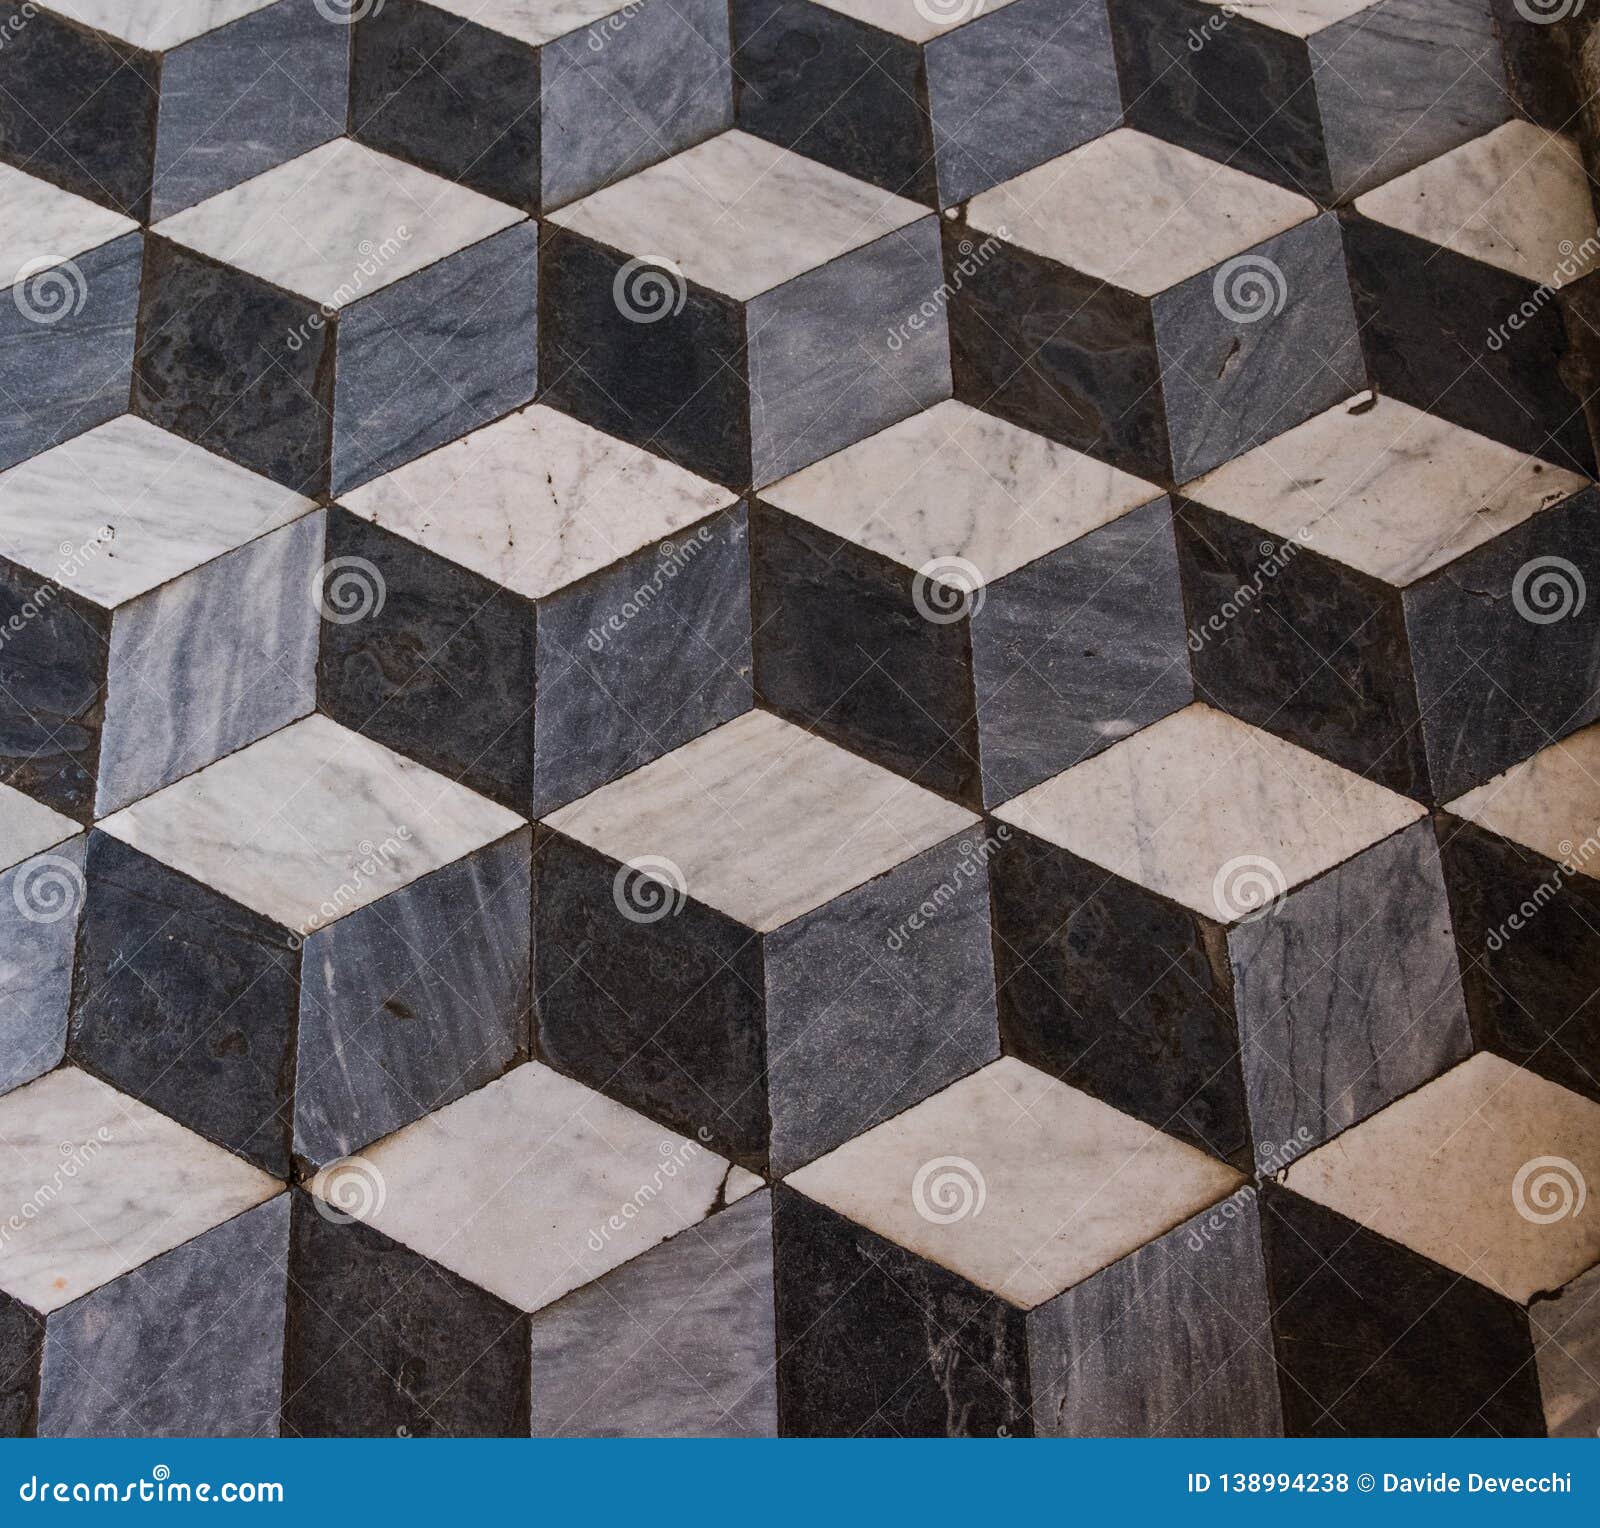 the three-dimensional effect f a marble cube floor in a church